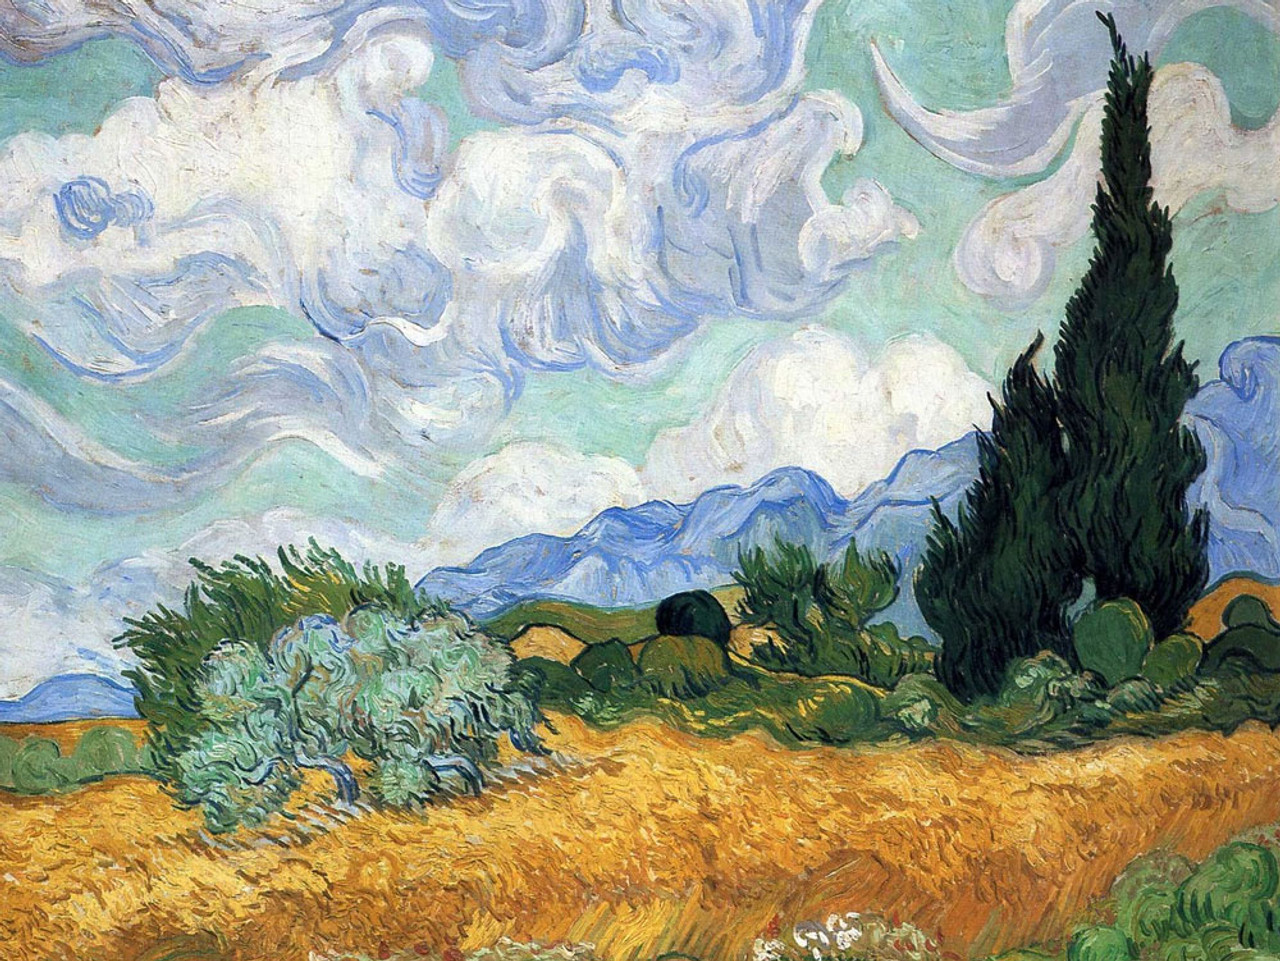 Wheat Field with Cypresses Impressionism & Post-Impressionism Jigsaw Puzzle